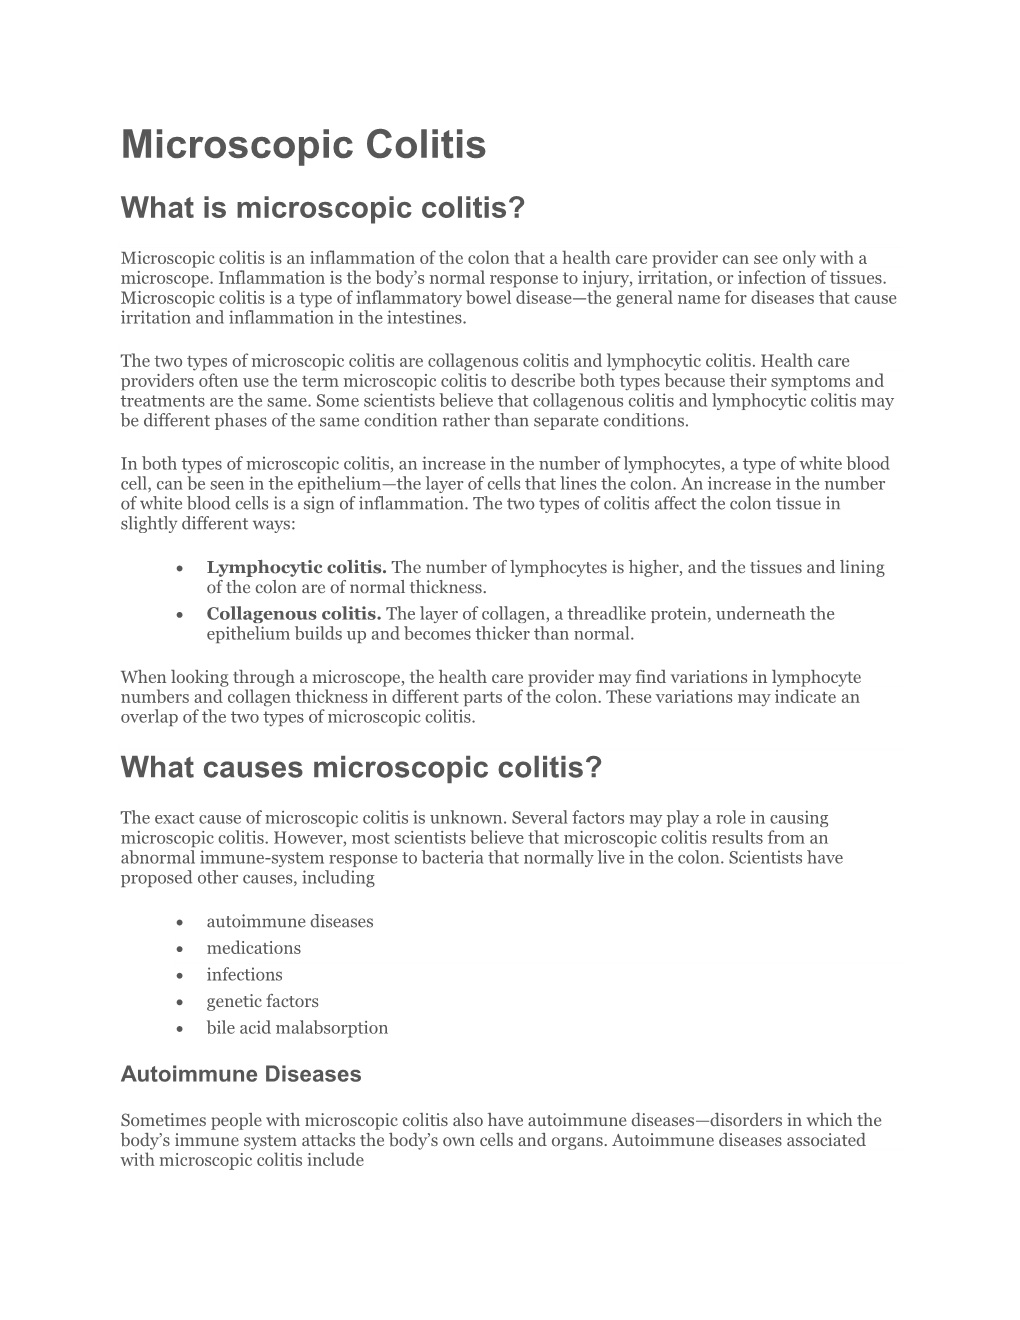 Microscopic Colitis What Is Microscopic Colitis?